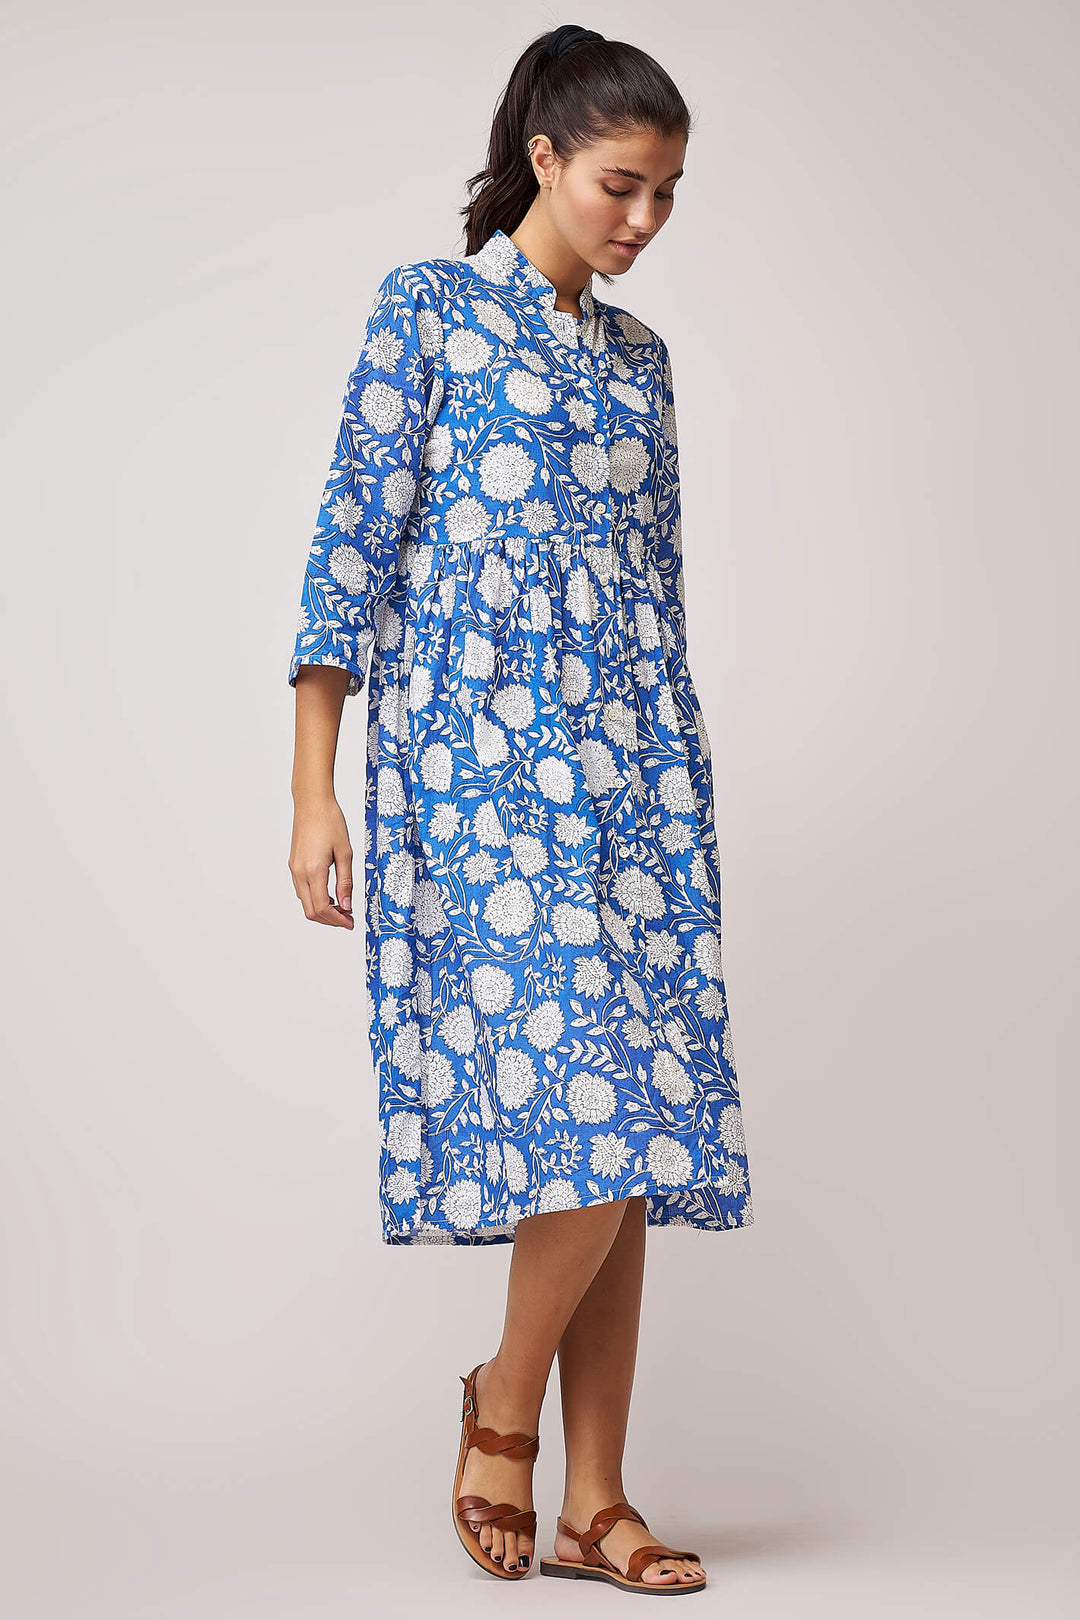 Dream Alia GK232 Blue Print Button Up Dress - Shirley Allum Boutique